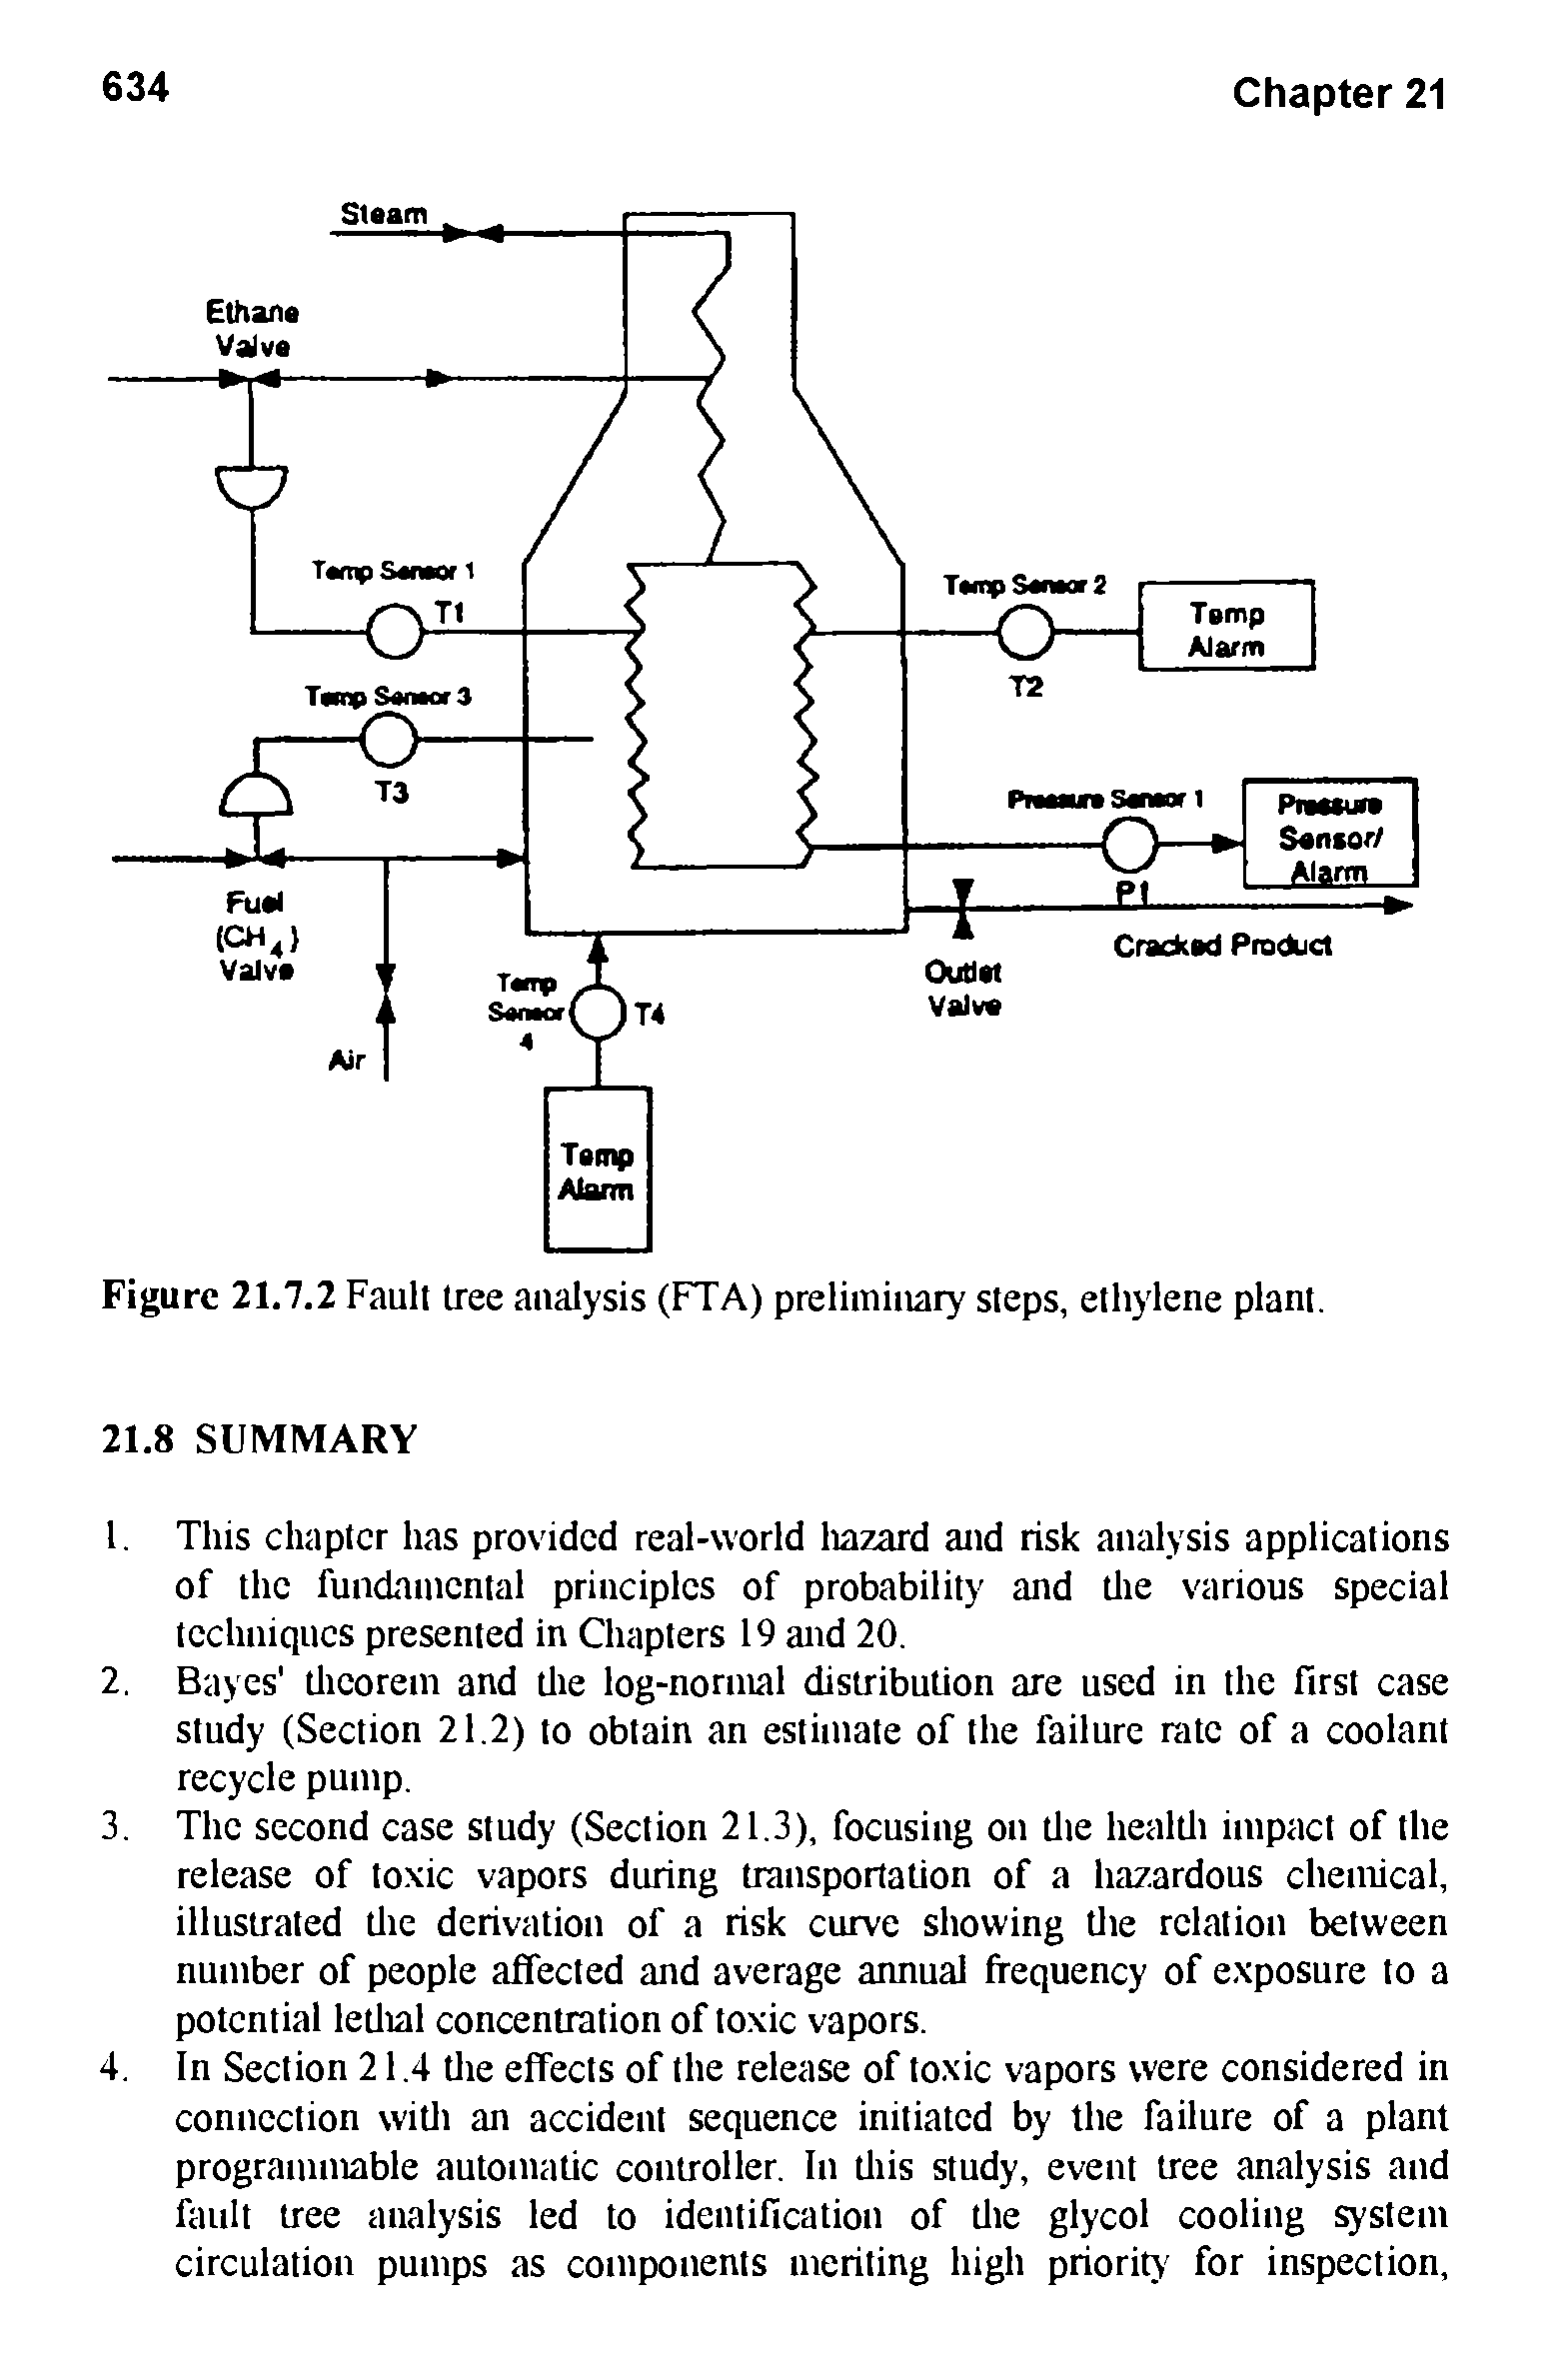 Figure 21.7.2 Fault tree analysis (FTA) preliminary steps, ethylene plant.